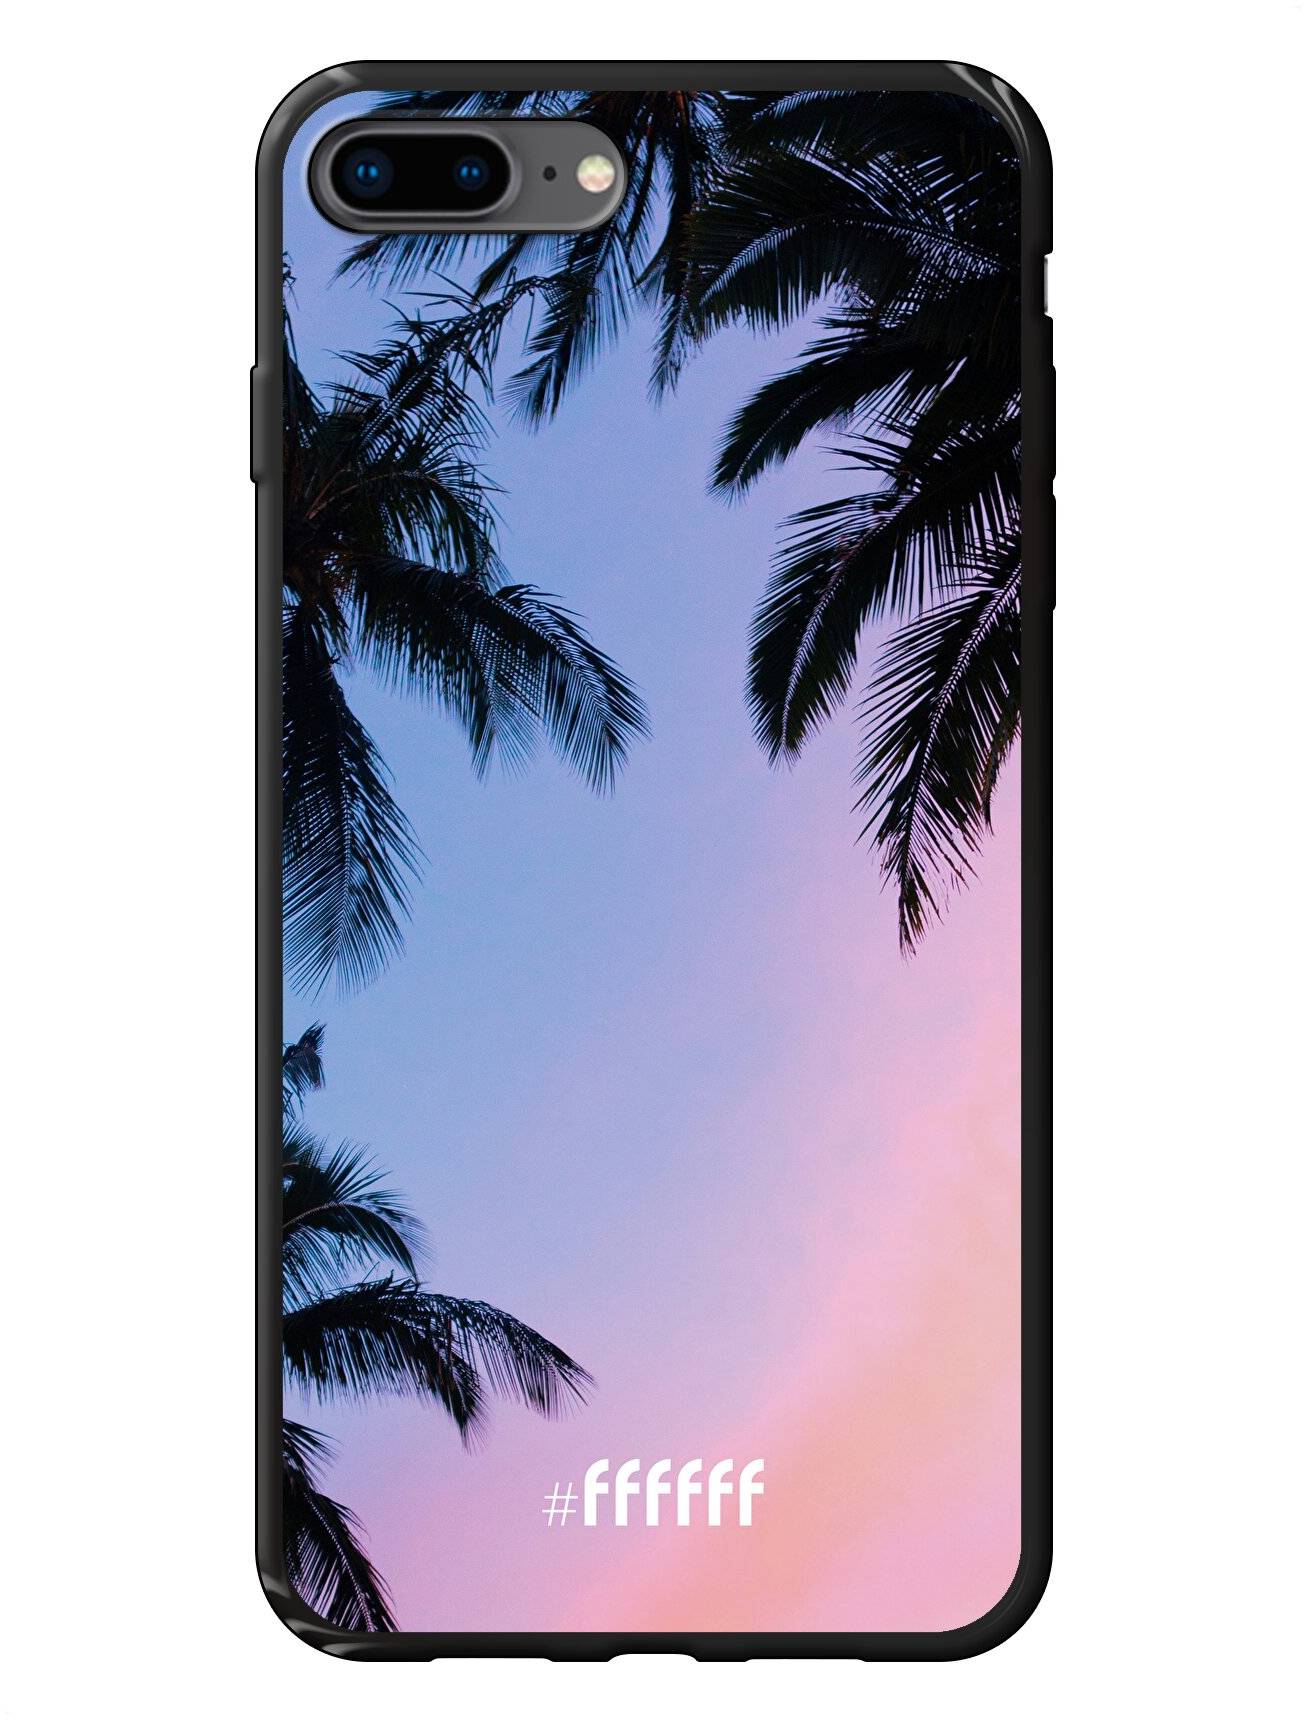 Sunset Palms iPhone 7 Plus